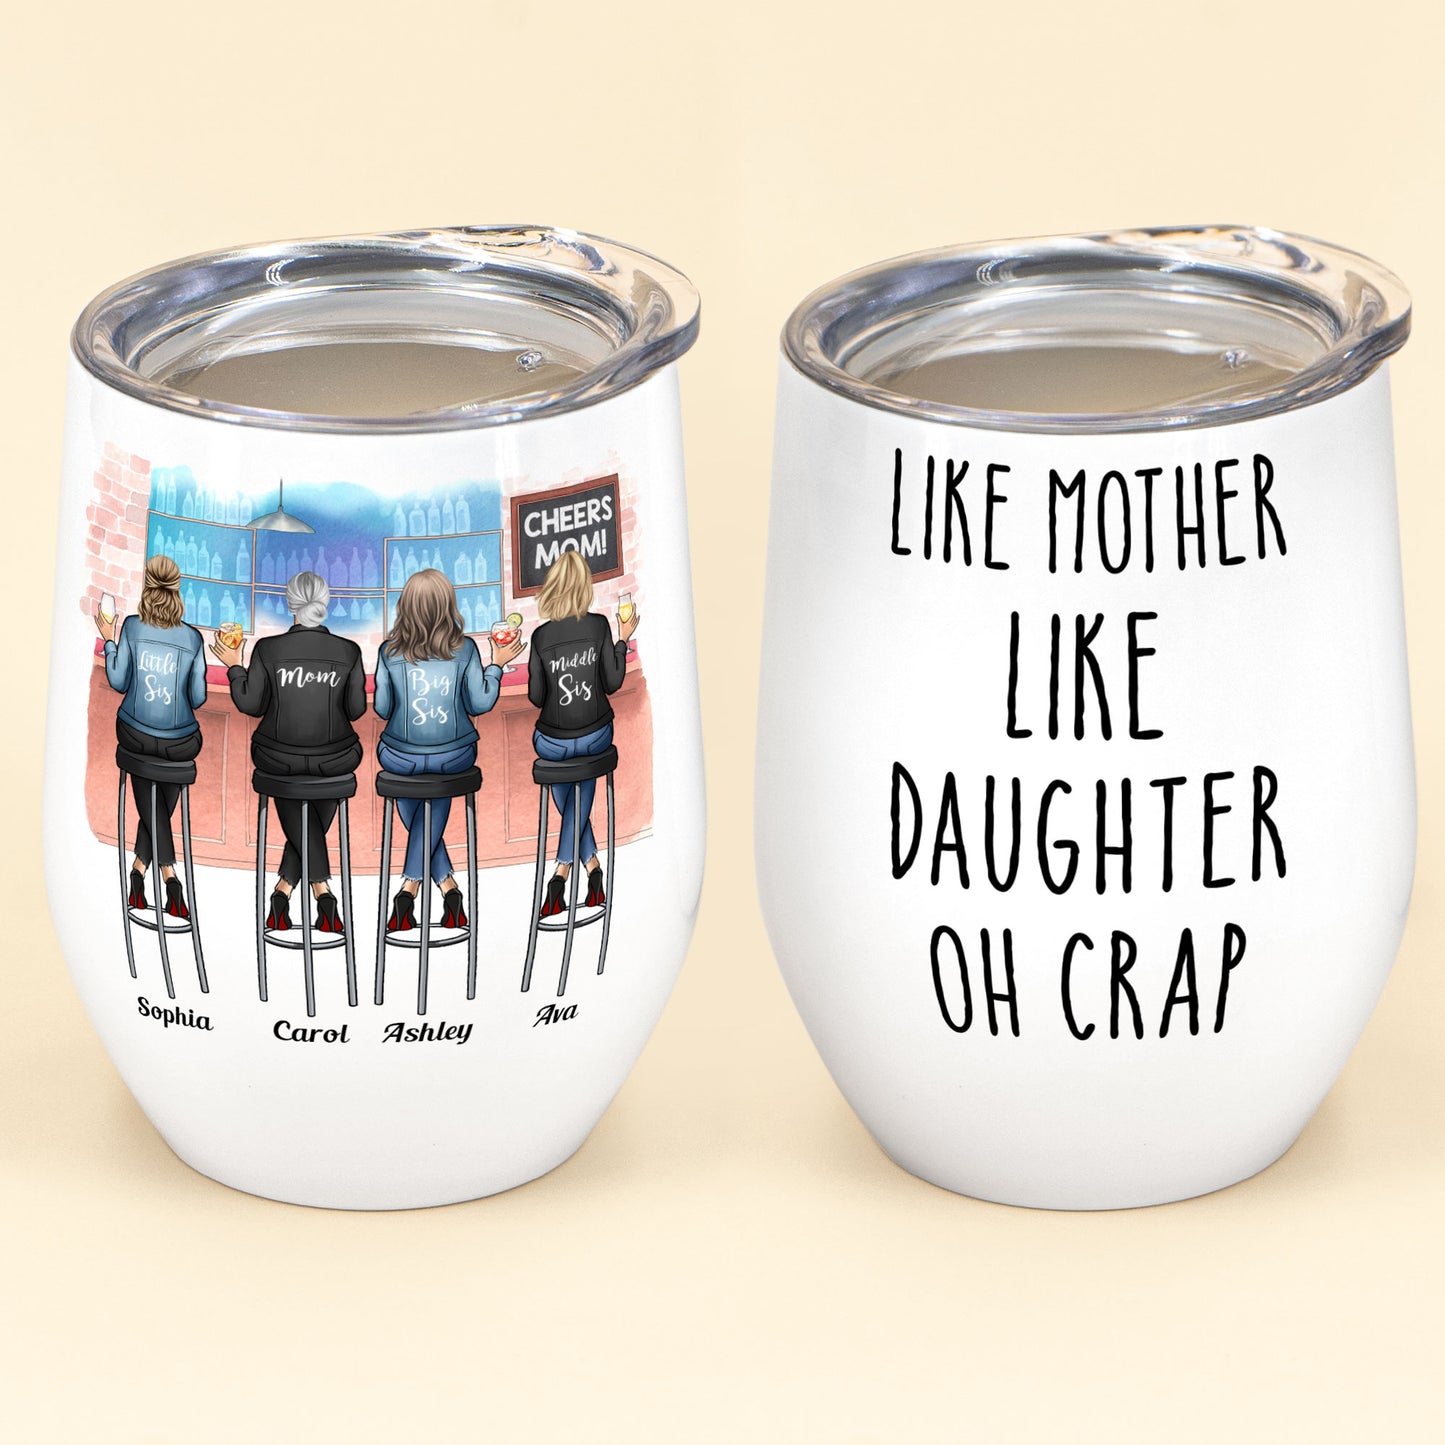 Reindeer Reese's Cups – Like Mother, Like Daughter